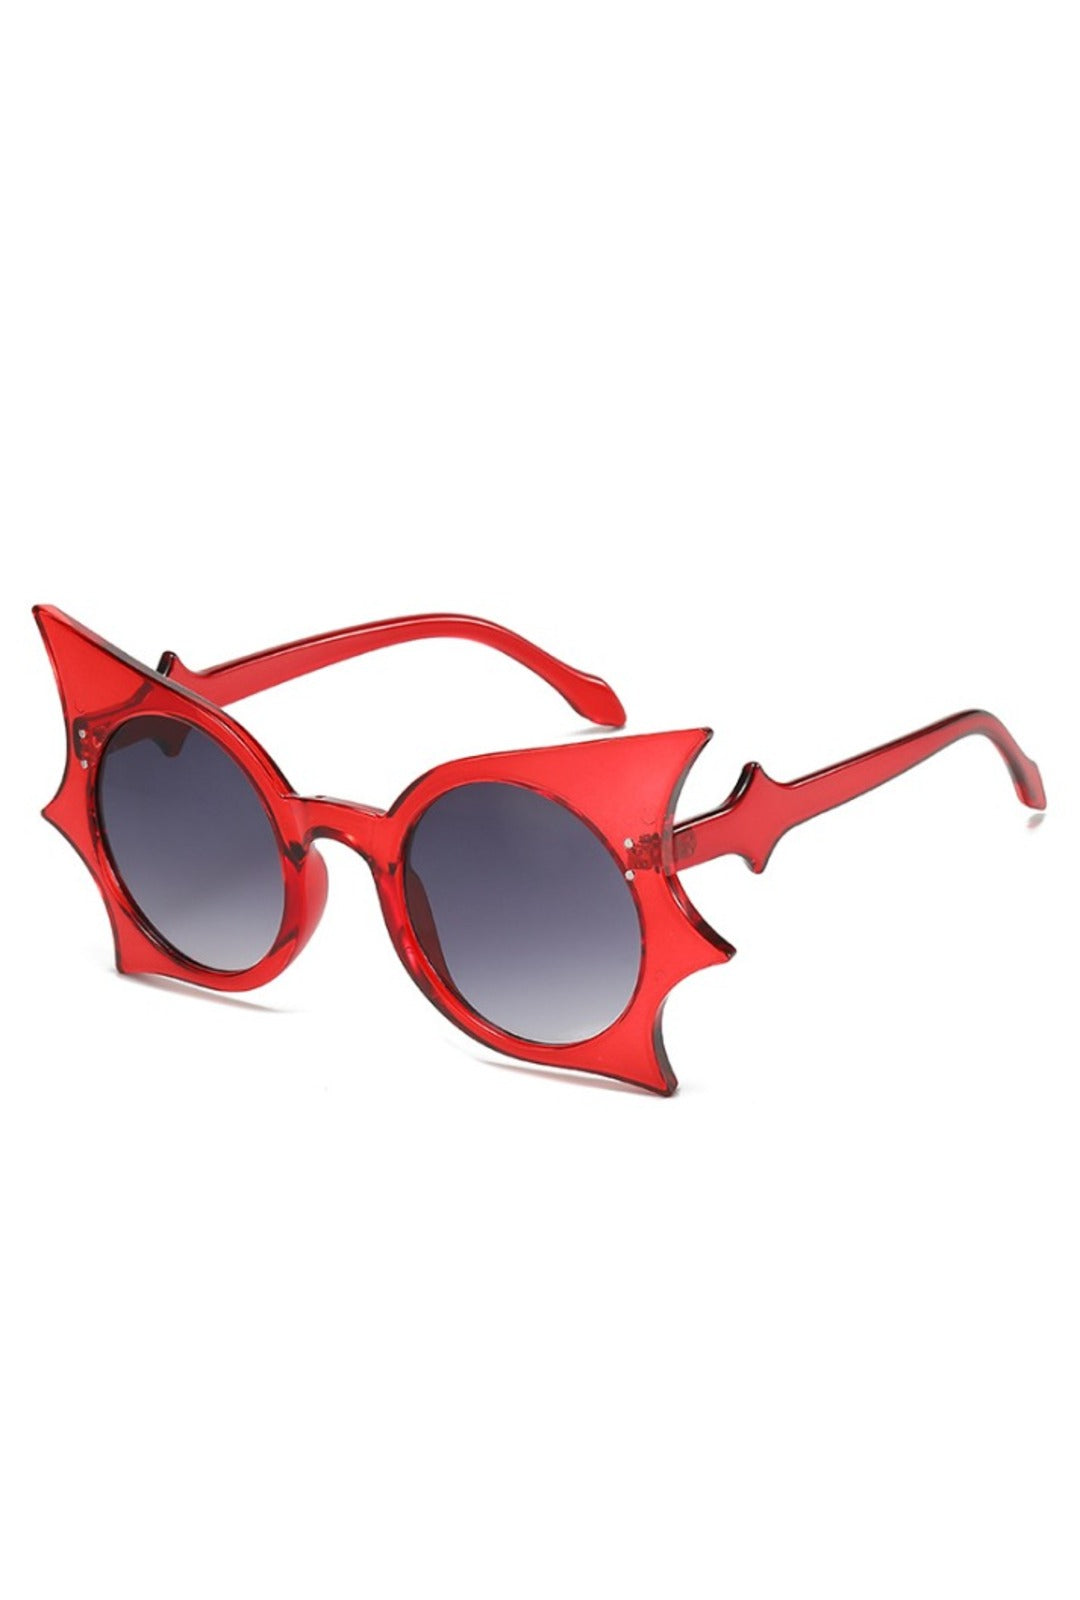 Red Bat Winged Glasses